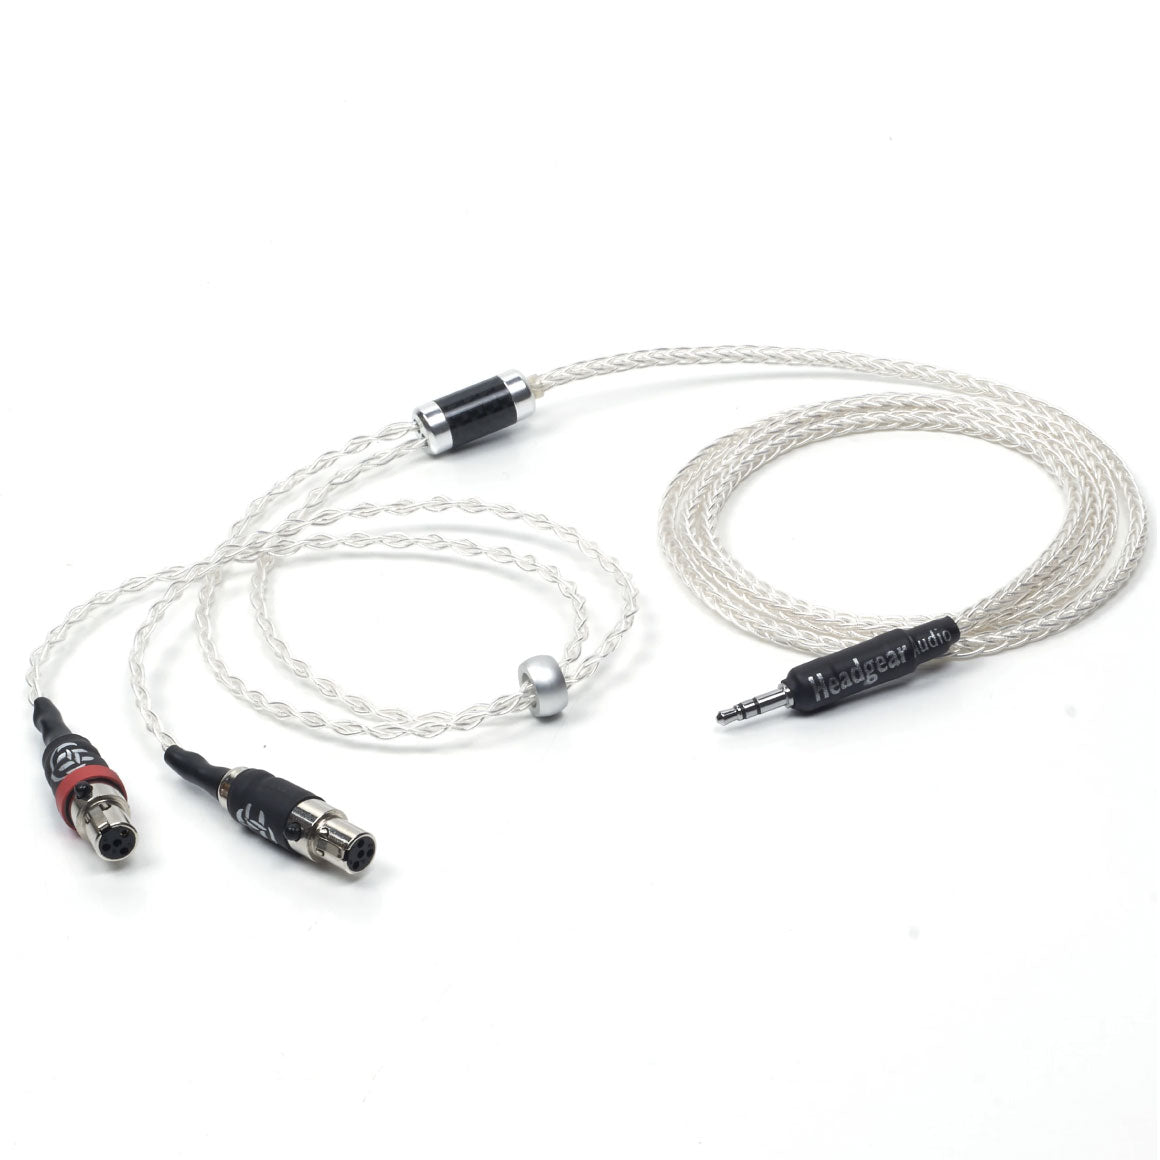 Headgear Audio - Athena Silver Cable for Audeze LCD Series Headphones